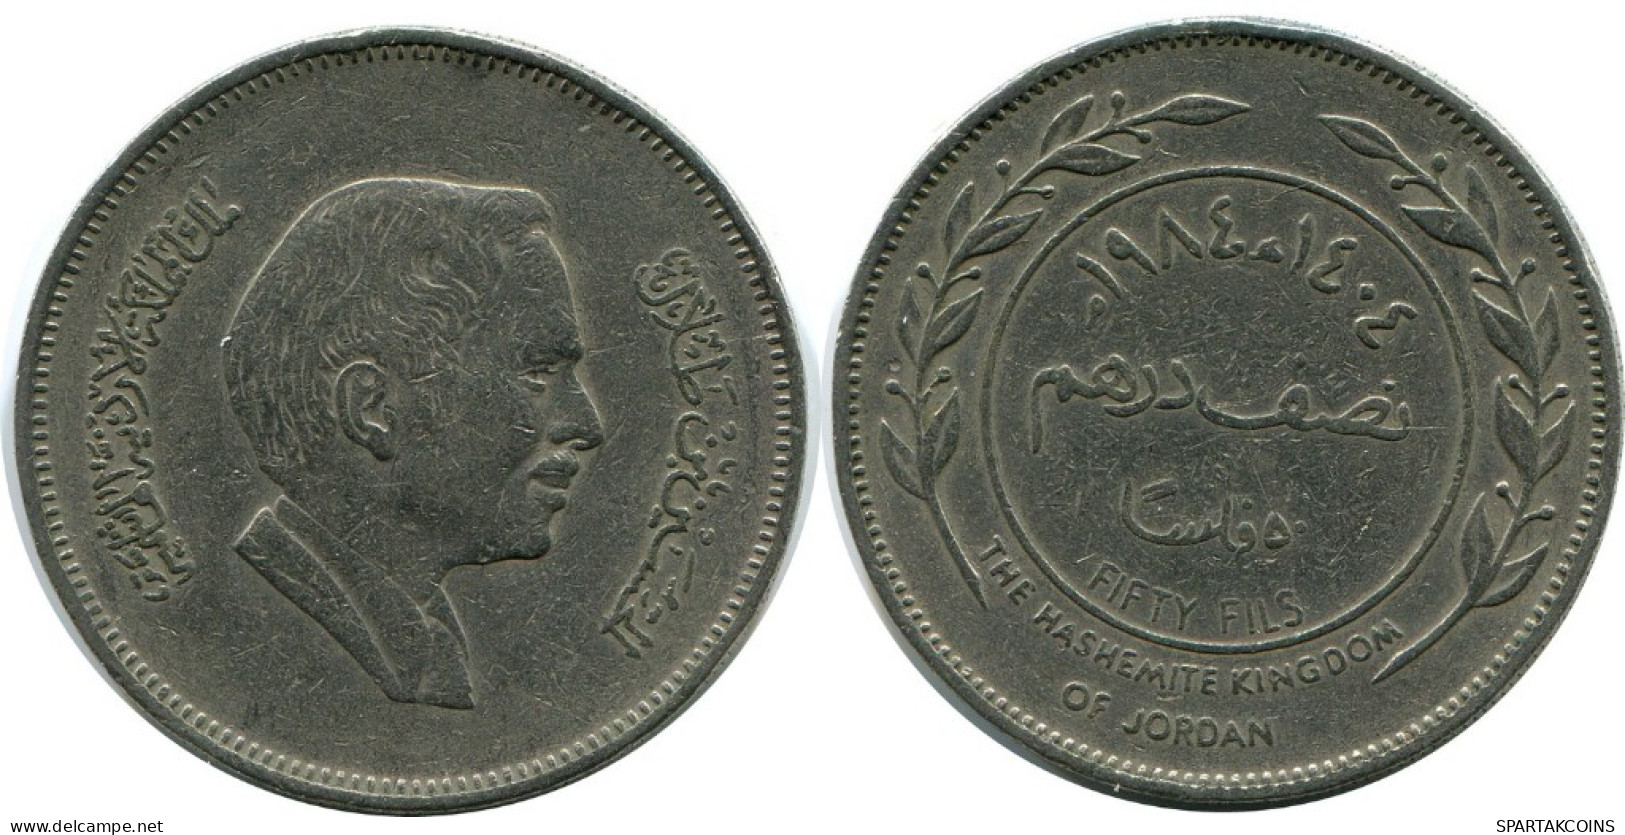 50 FILS 1984 JORDANIA JORDAN Islámico Moneda #AK153.E.A - Jordan